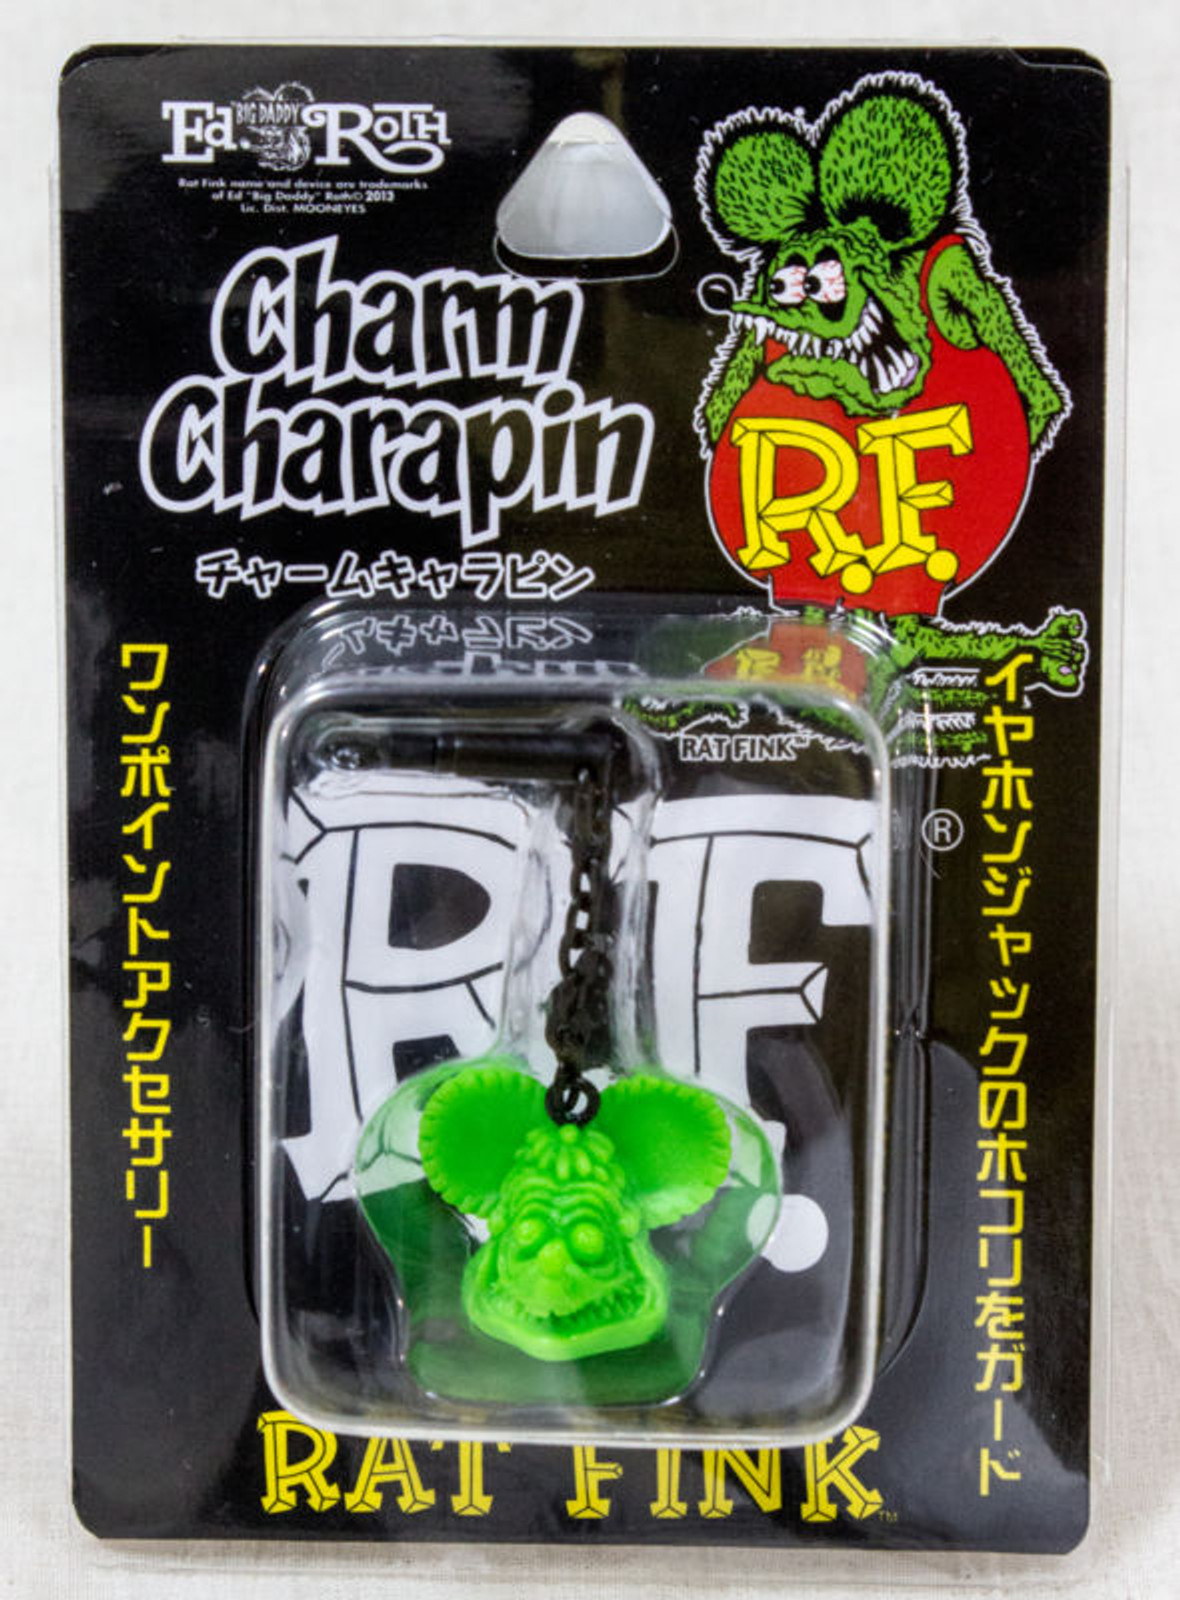 RAT FINK Green Ver. Charm Charapin for Smart Phones for Earphone Jack